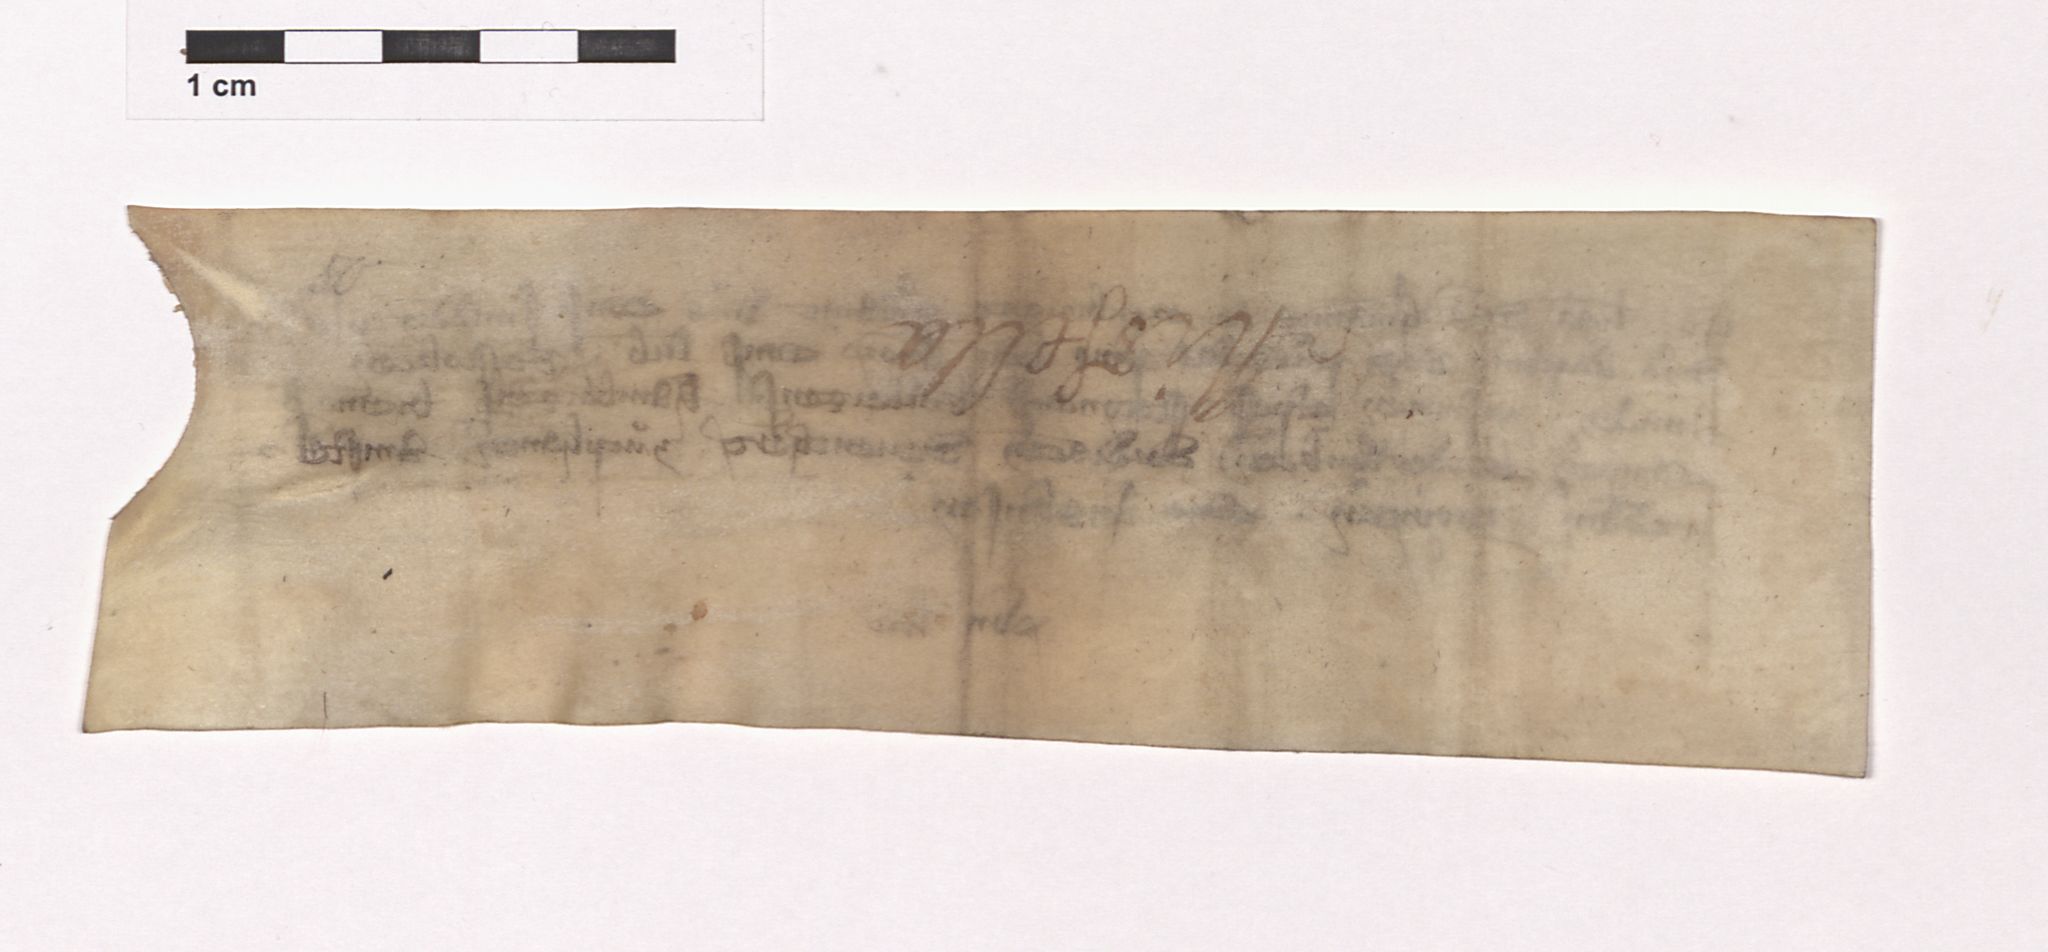 07.1 Urkunden, 3 Auswärtige Beziehungen (Externa), AHL/-/21: Norwegen (Norvagica); Kontor zu Bergen, 1247-1747, p. 442